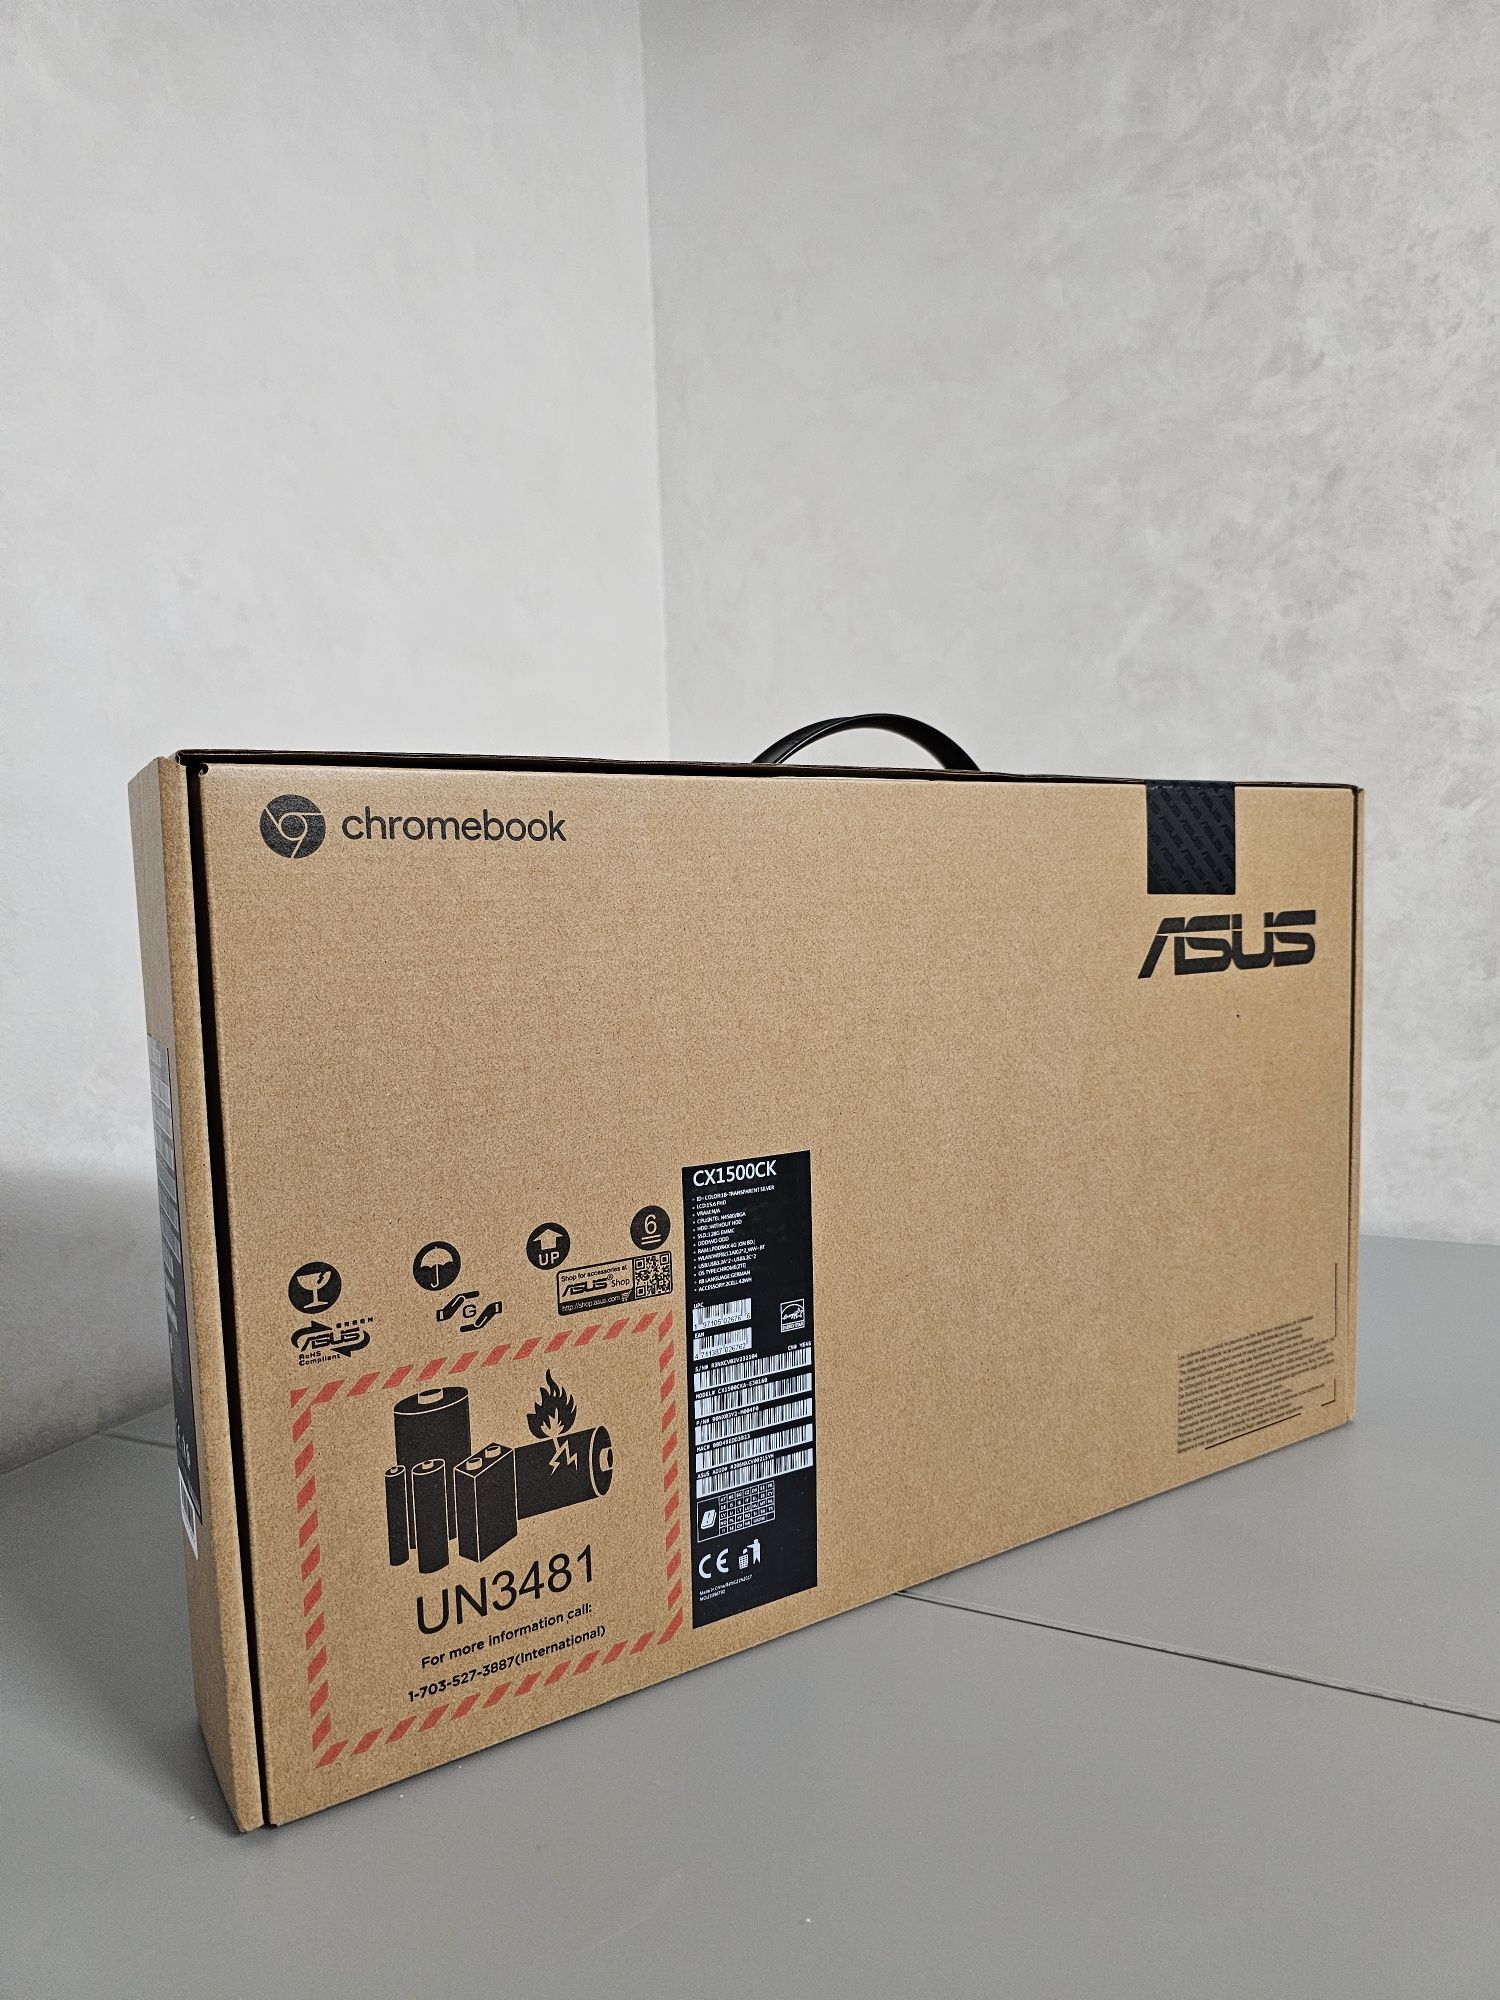 ASUS Chromebook CX1500CK